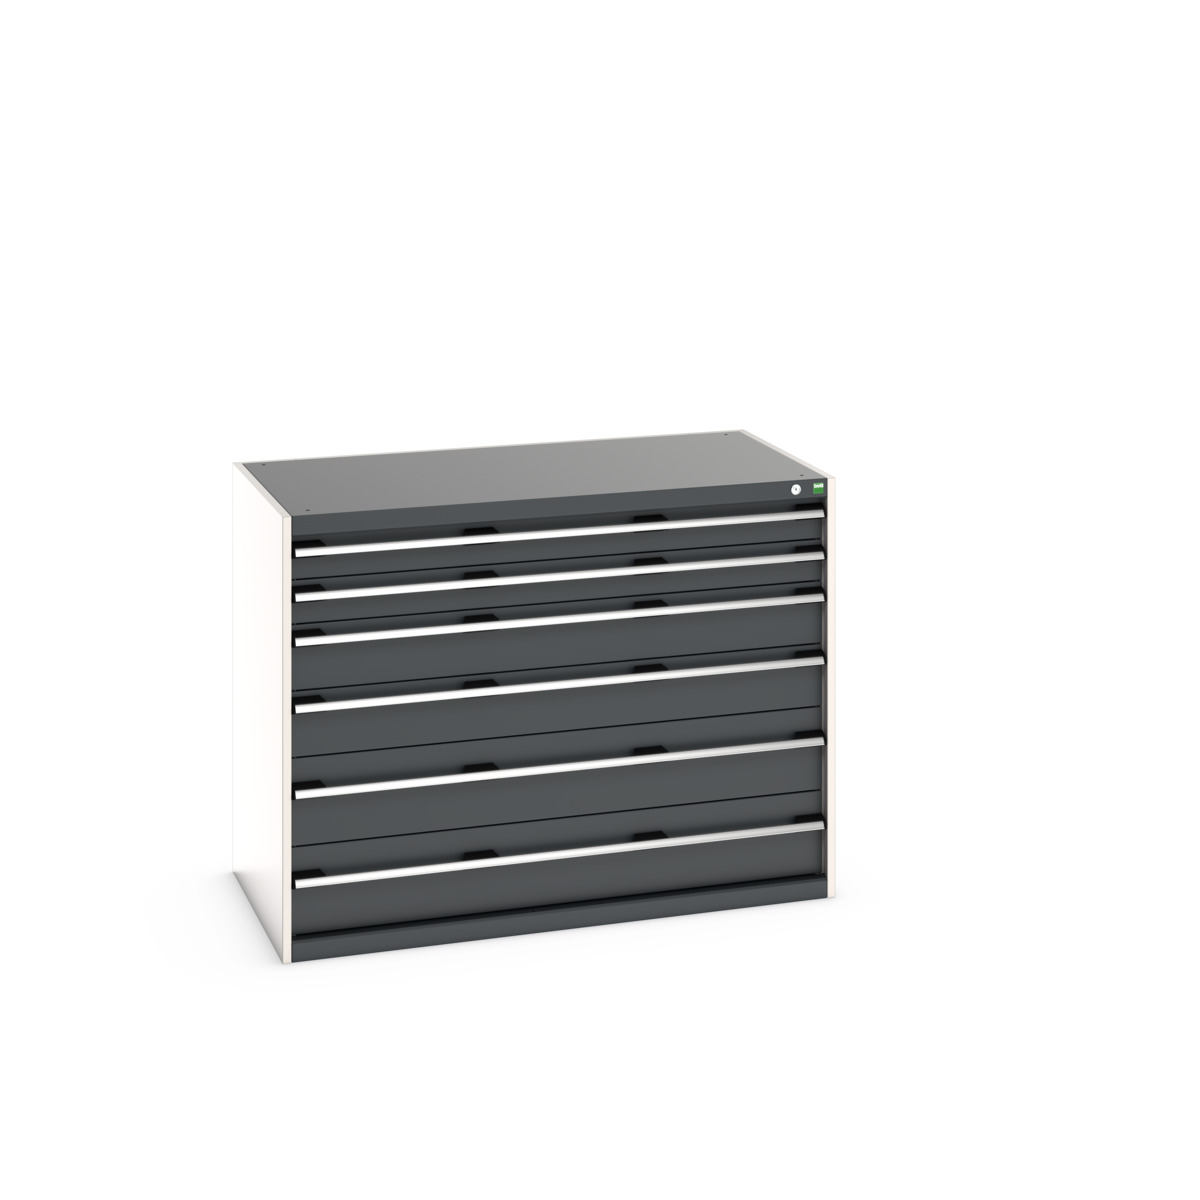 40030094. - cubio drawer cabinet